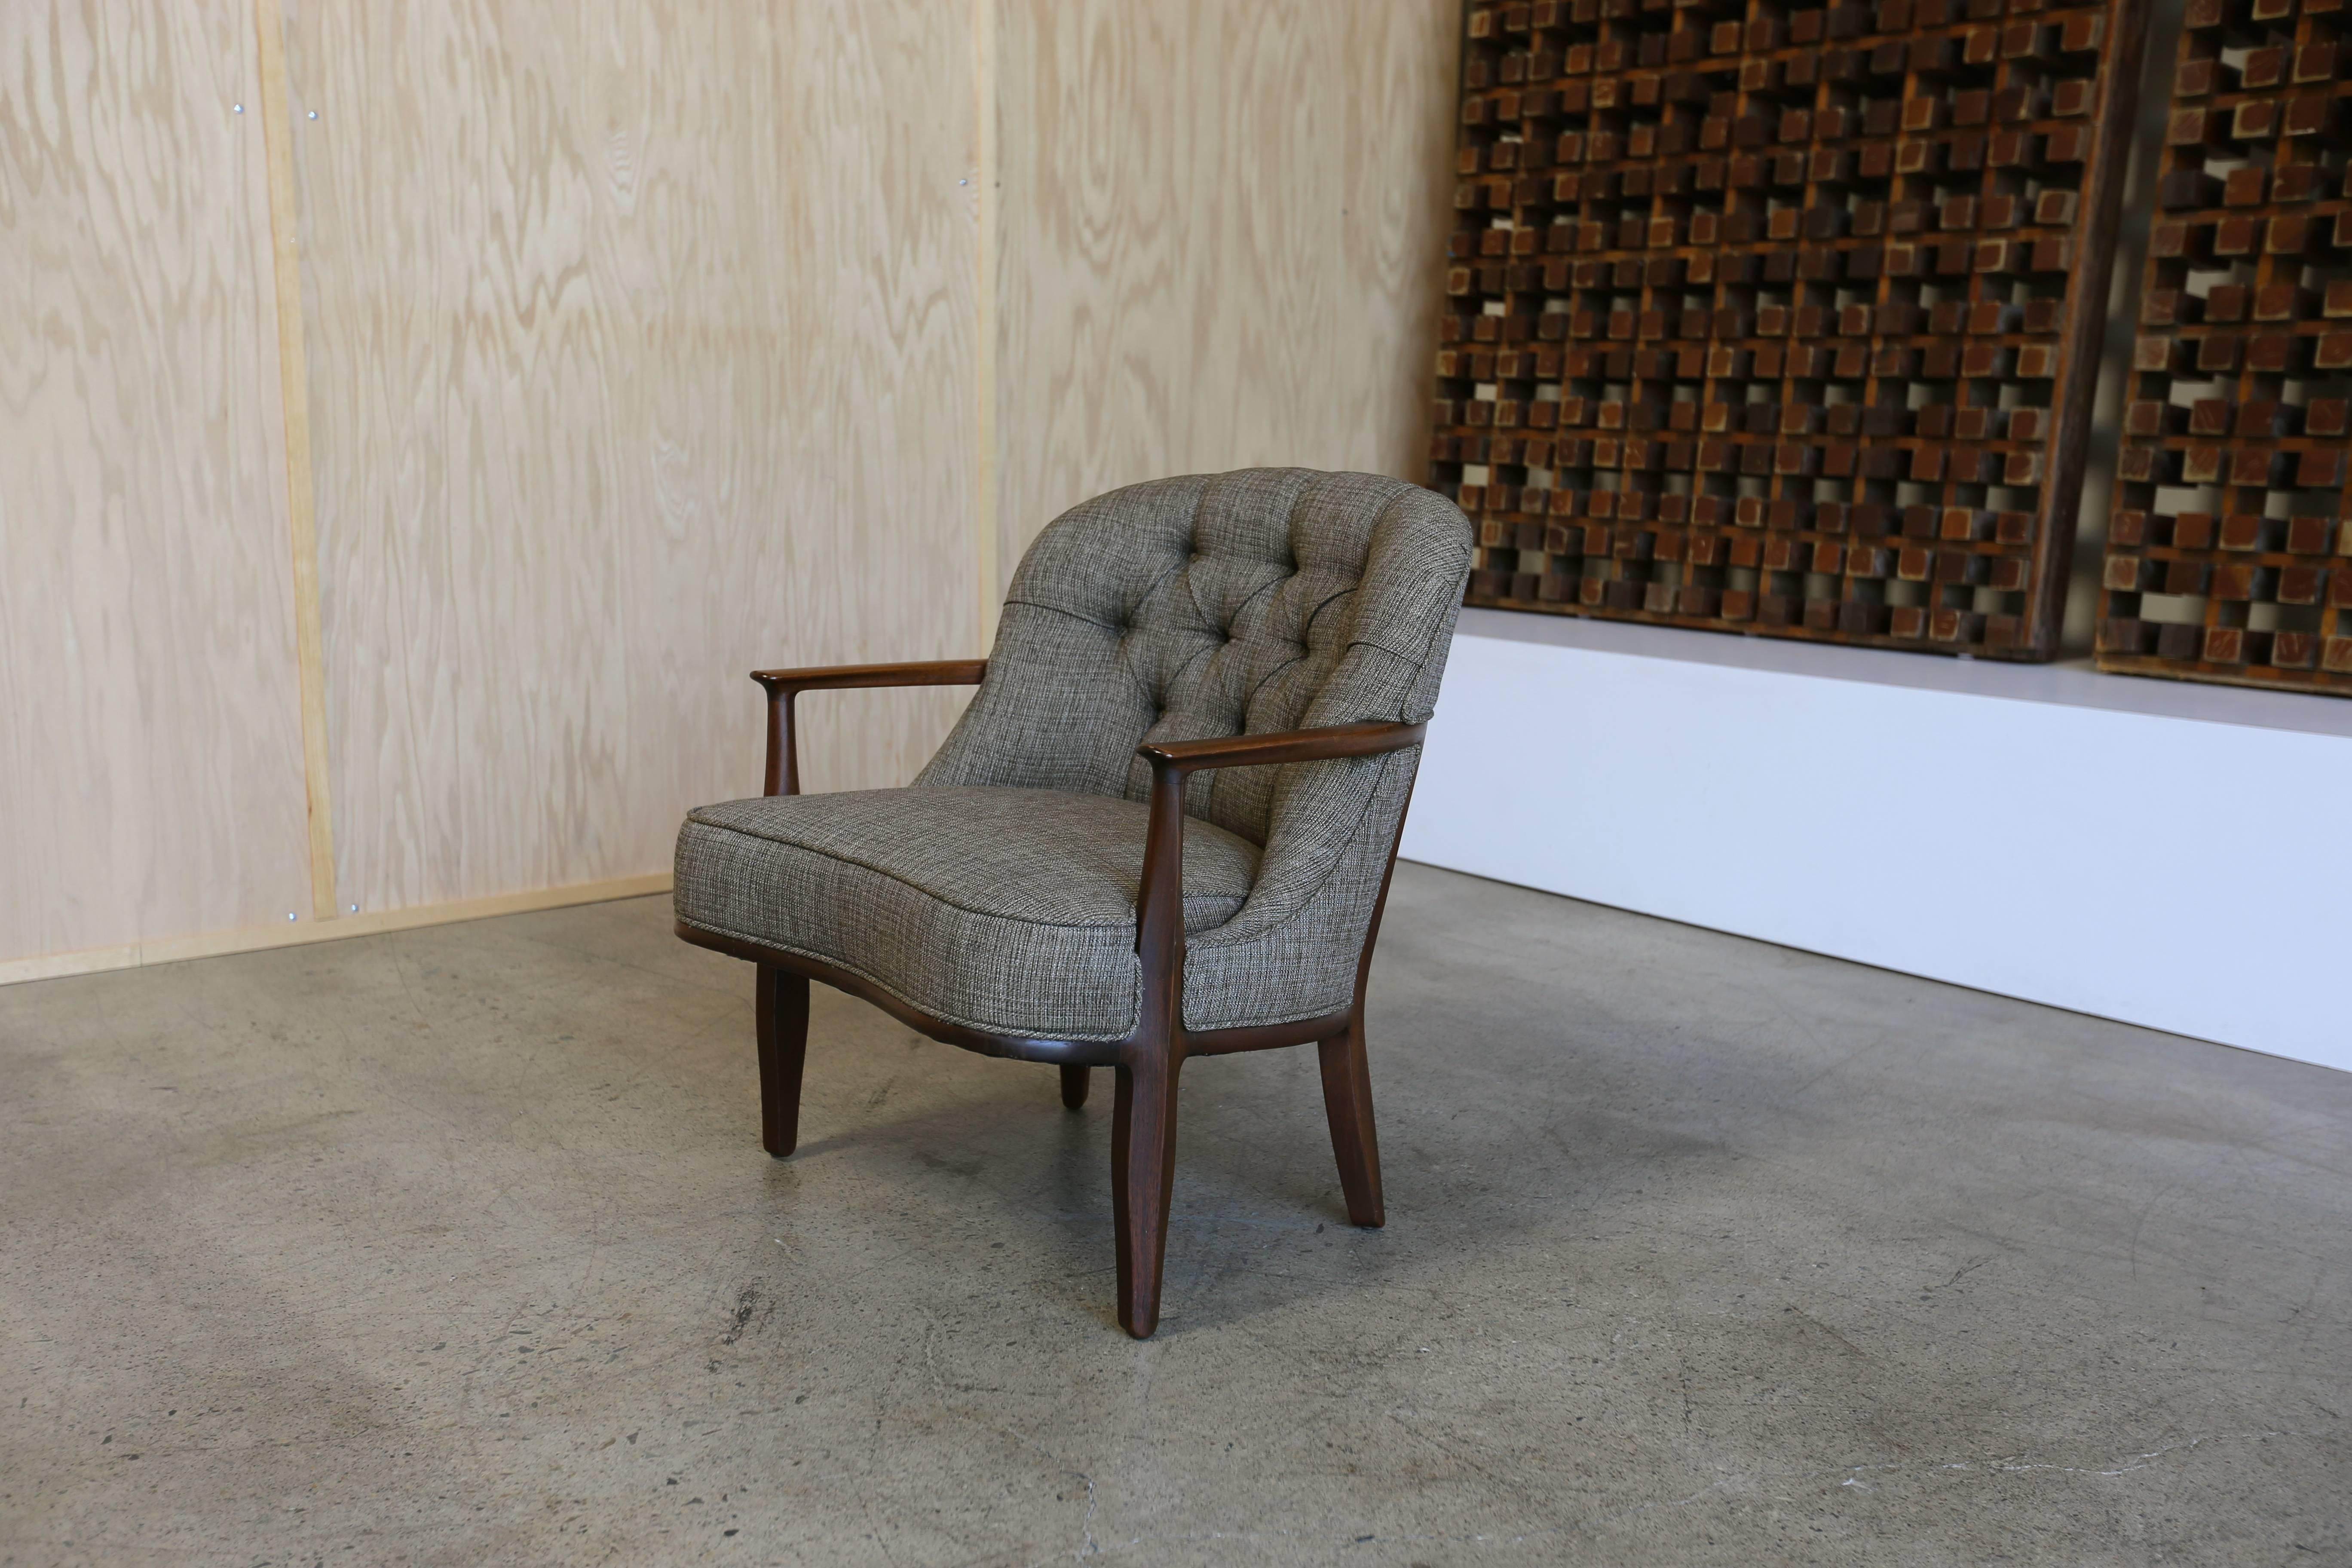 Janus lounge chair by Edward Wormley for Dunbar.